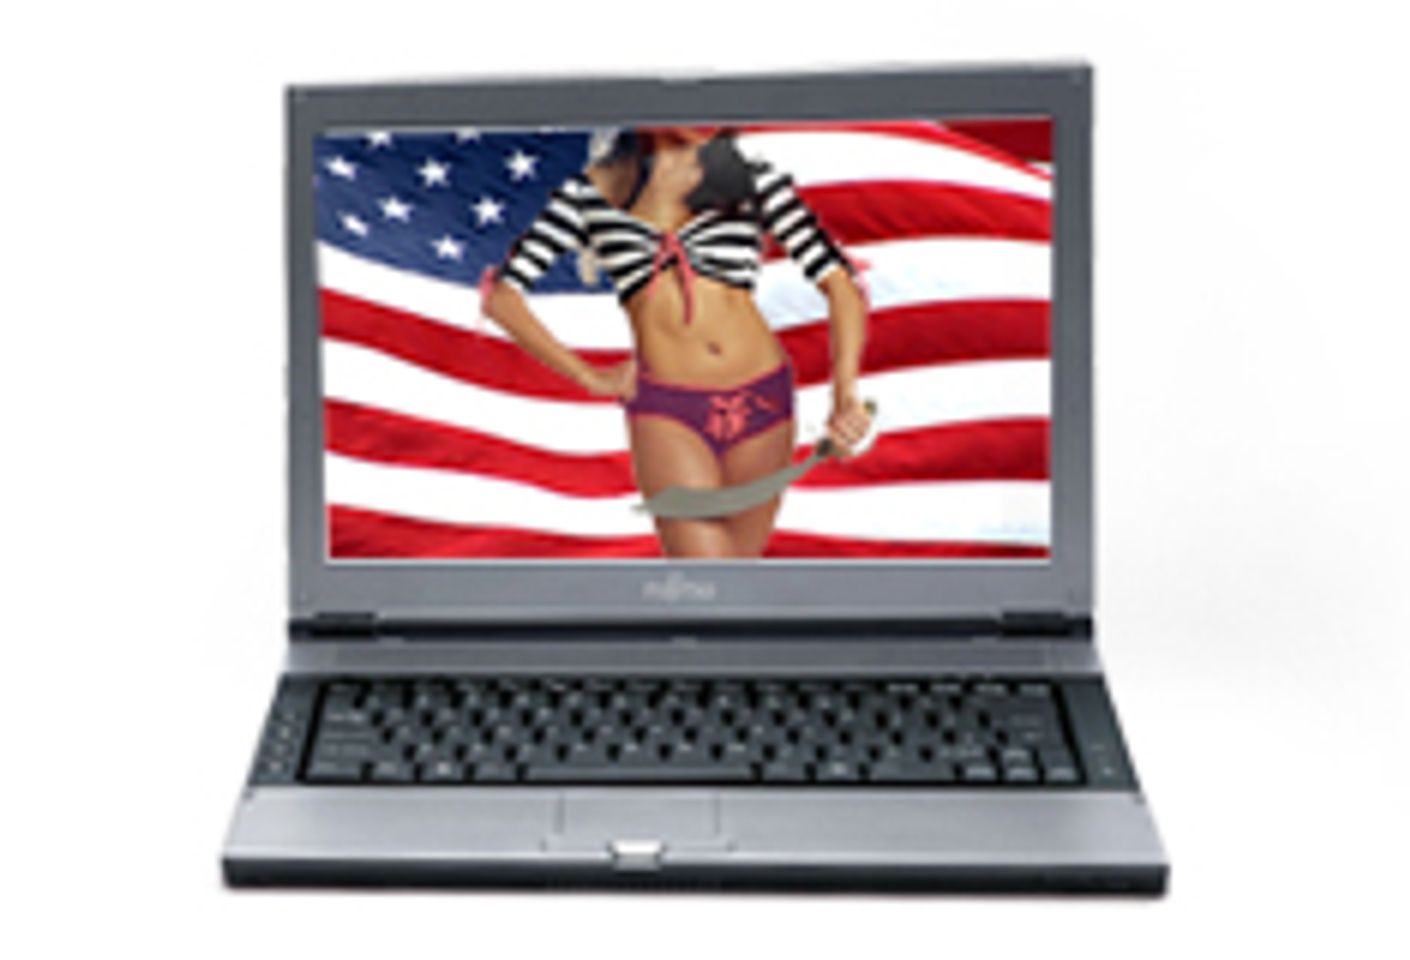 USAID Server Hacked To Host Pornography